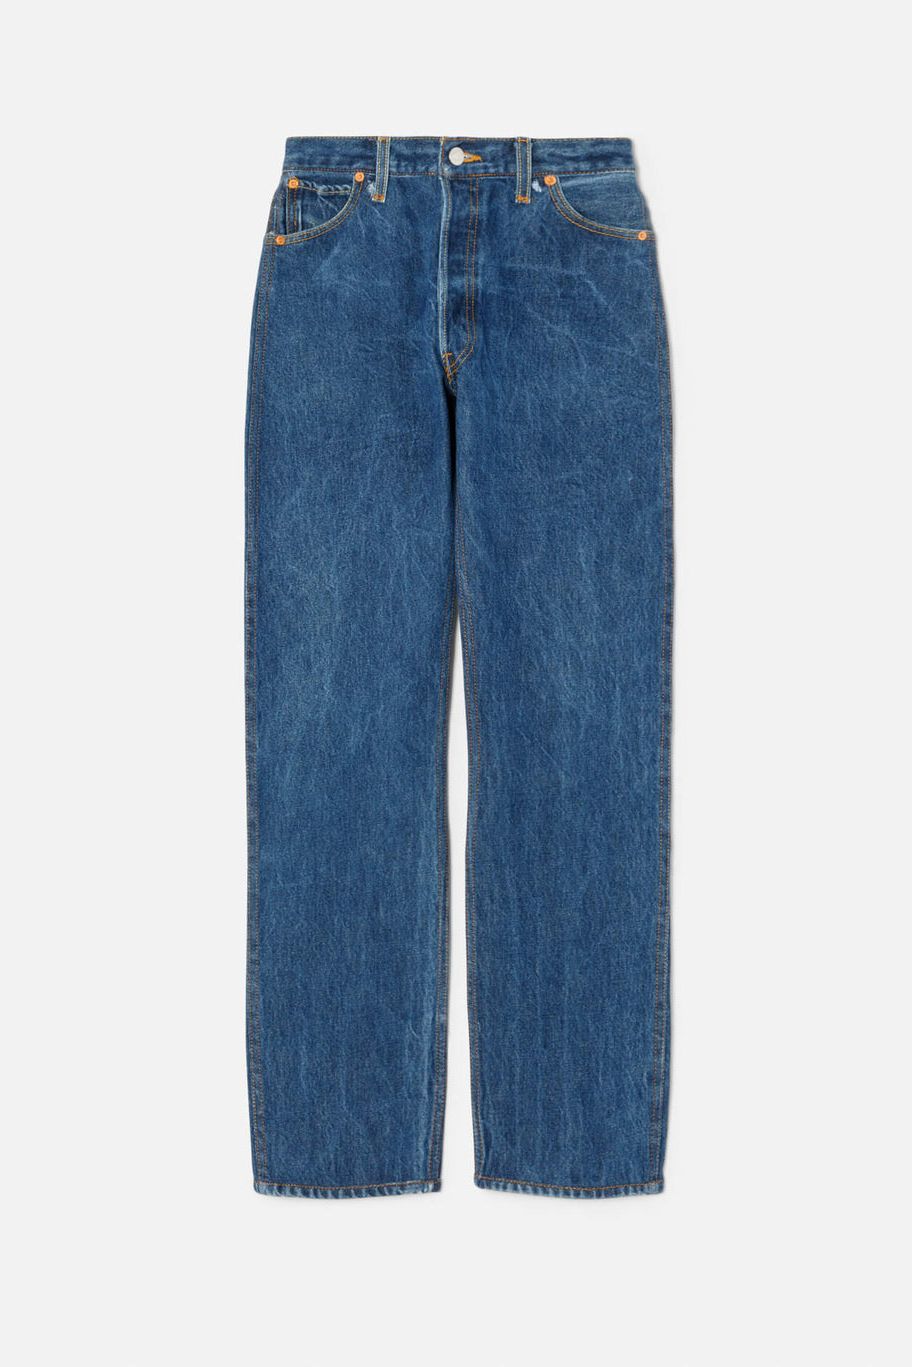 Best Vintage Jeans to Shop Online: 21 Pairs of Chic Vintage Denim